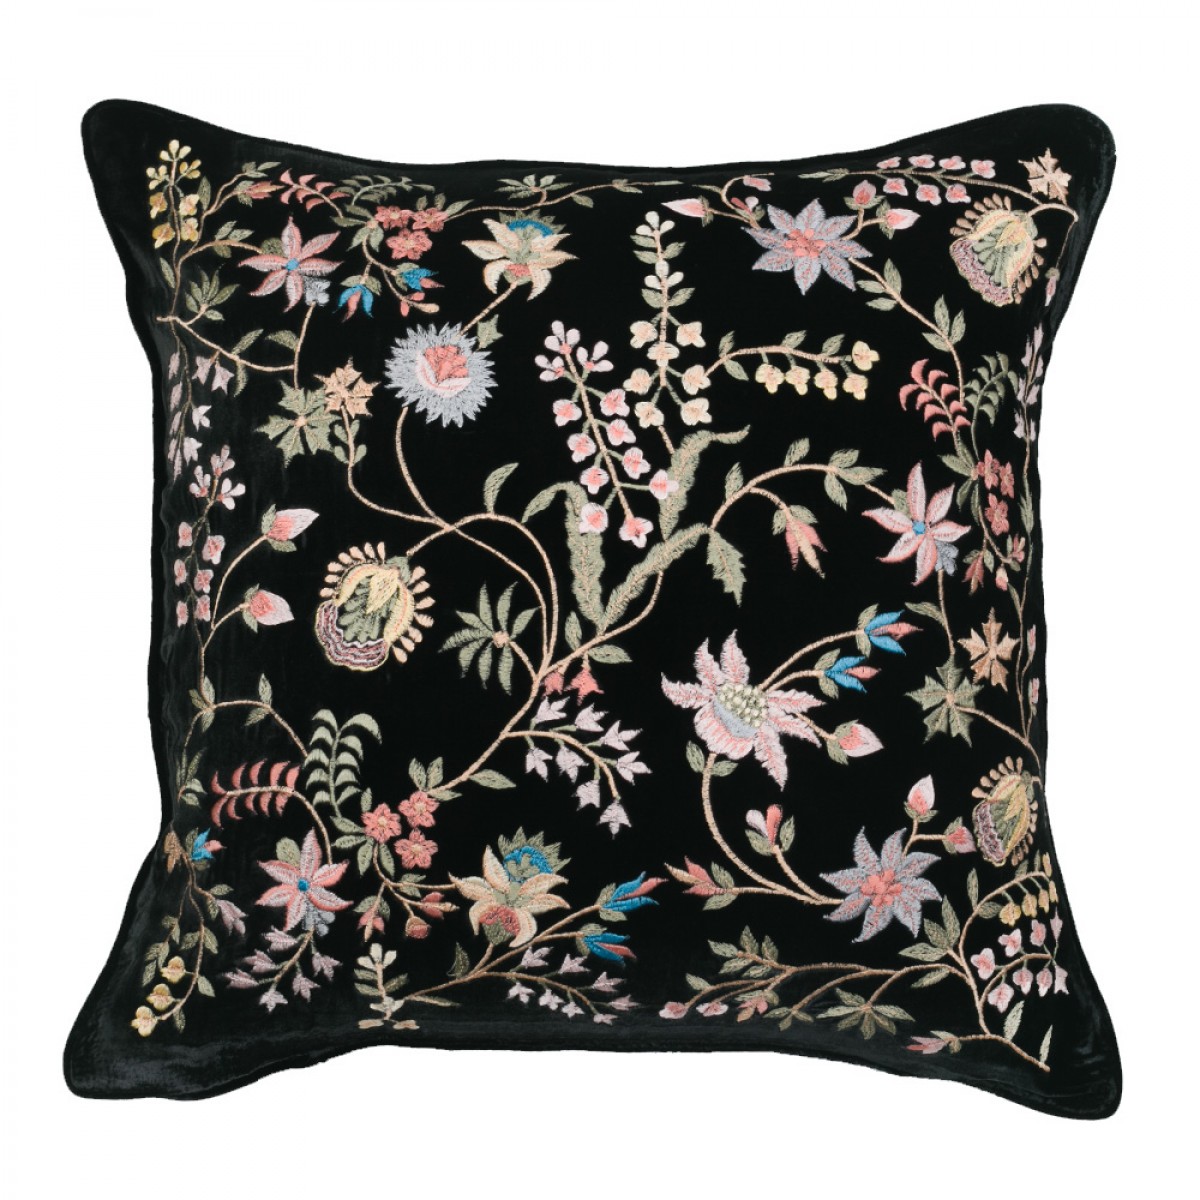 Designer Embroidered Cushion Cover - Black